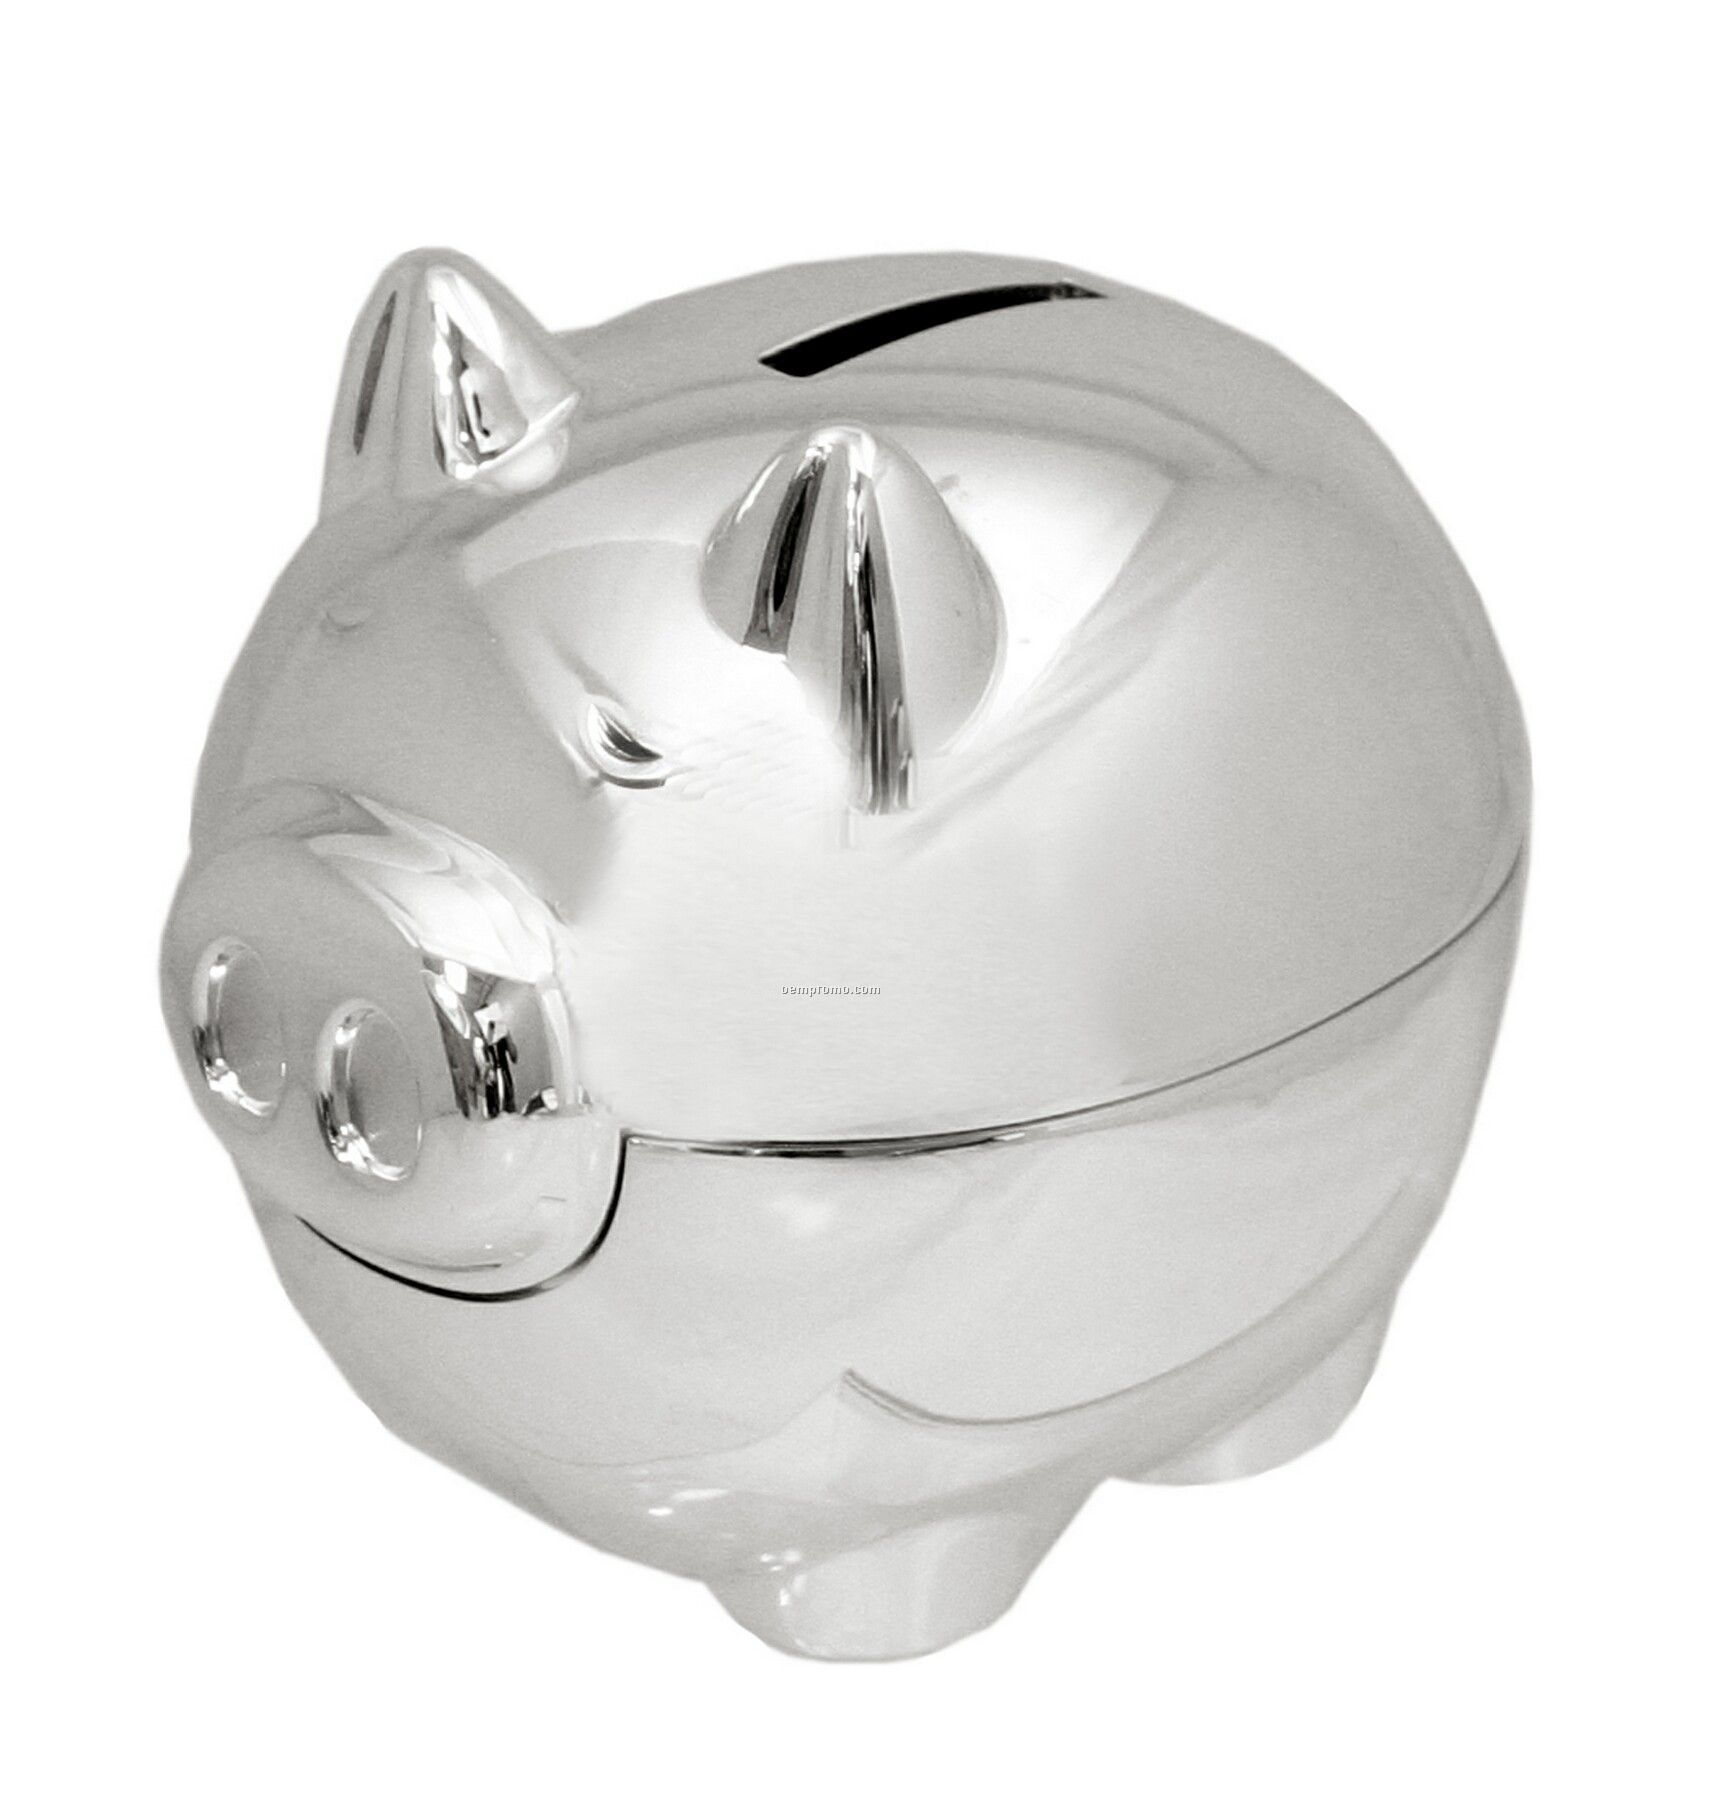 Silver Piggy Bank